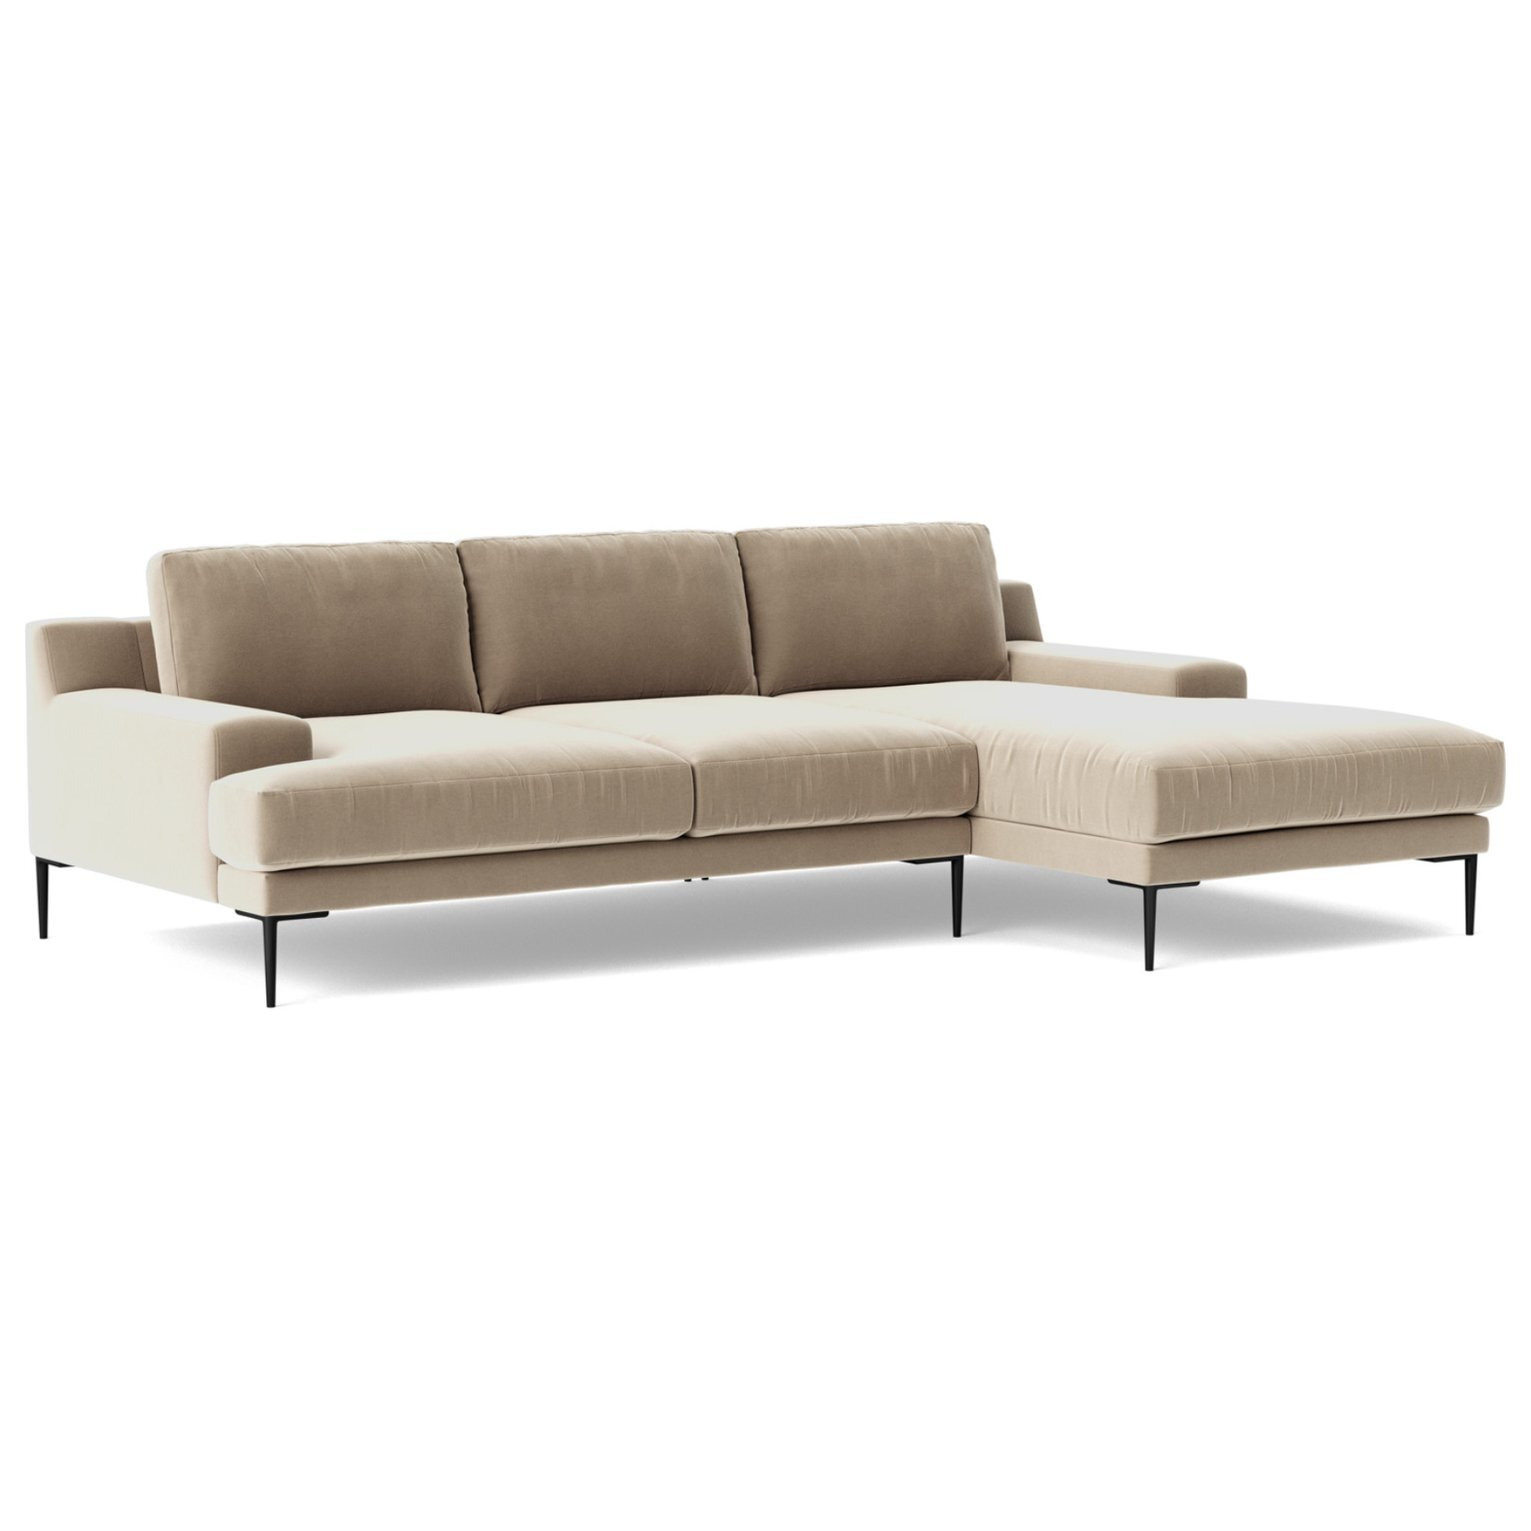 Swoon Almera Velvet Right Hand Corner Sofa - Taupe - image 1